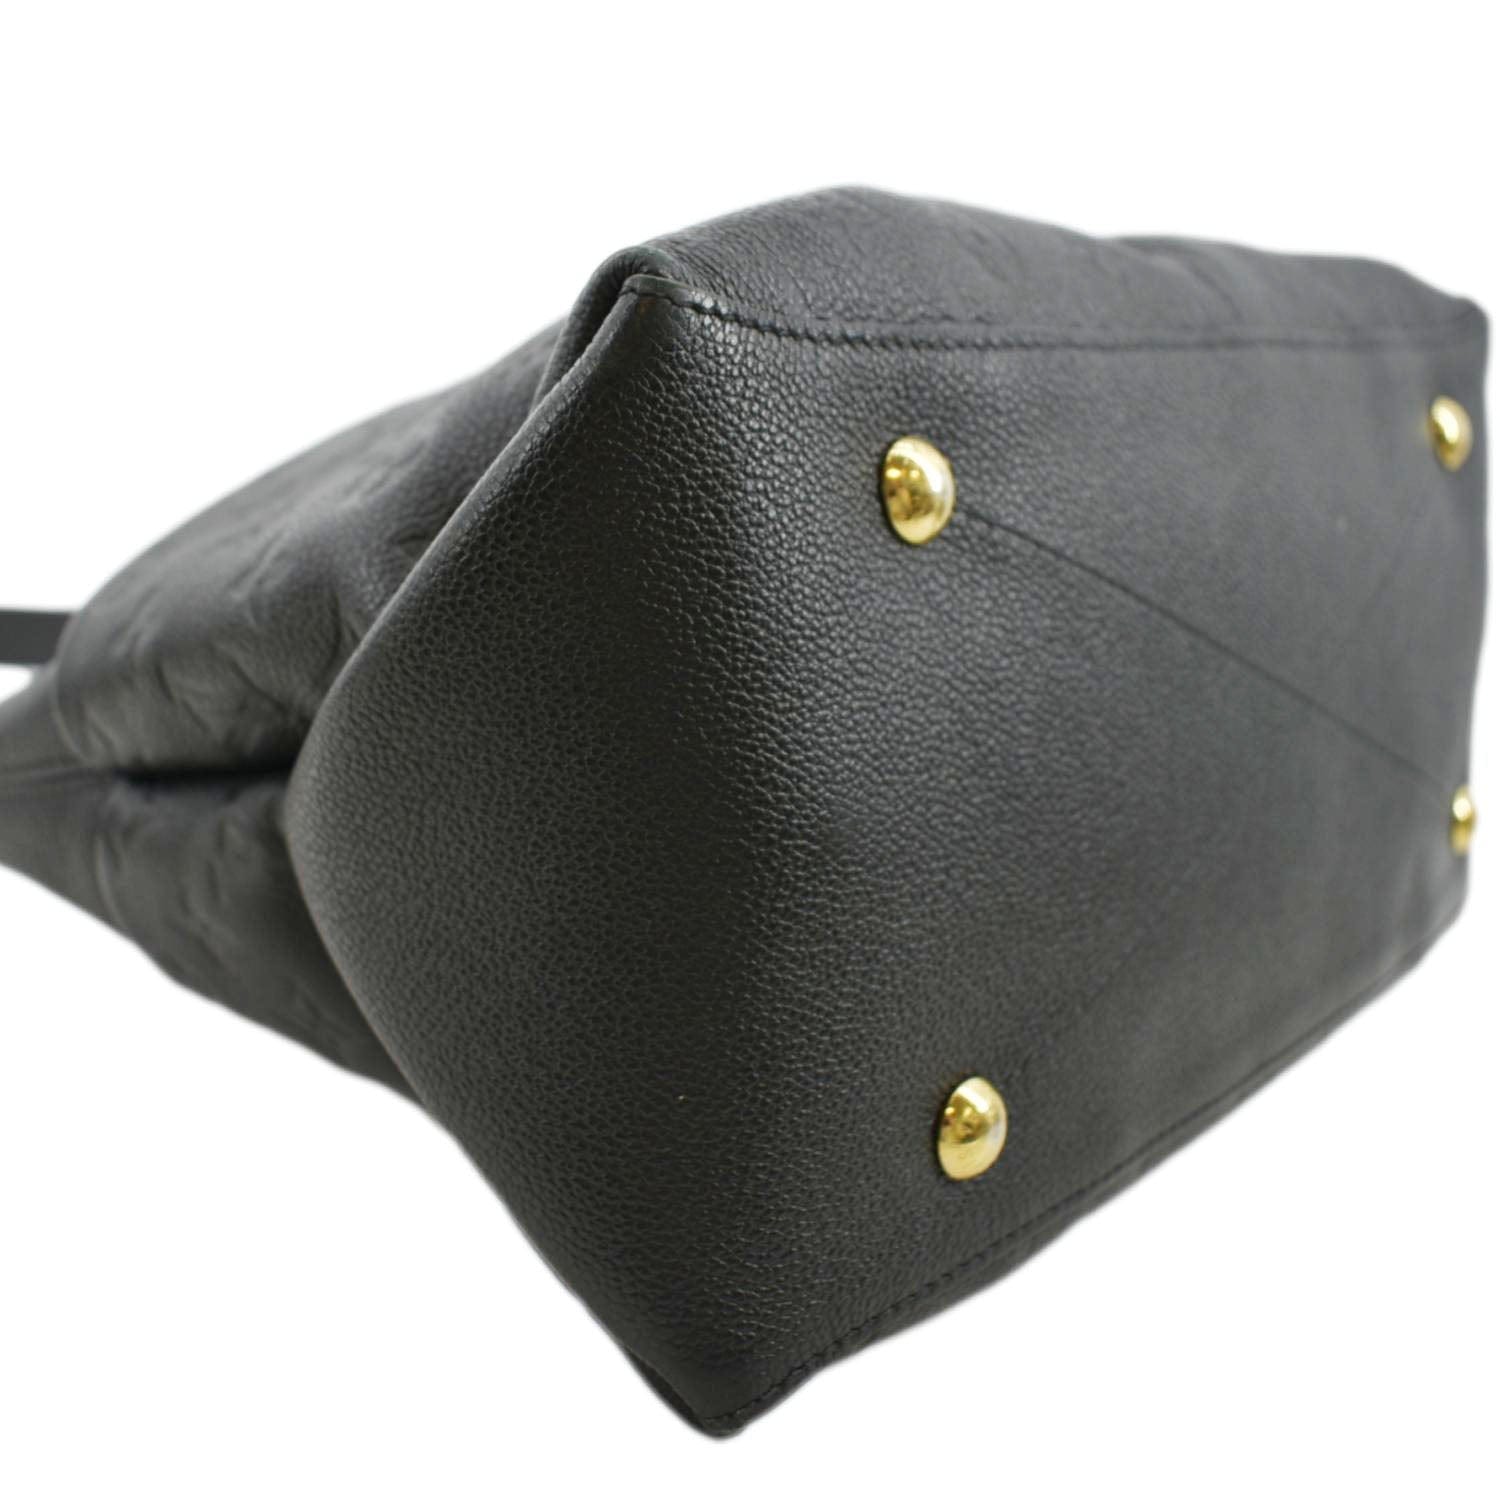 Louis Vuitton Maida Monogram Empreinte Leather Hobo Shoulder Bag